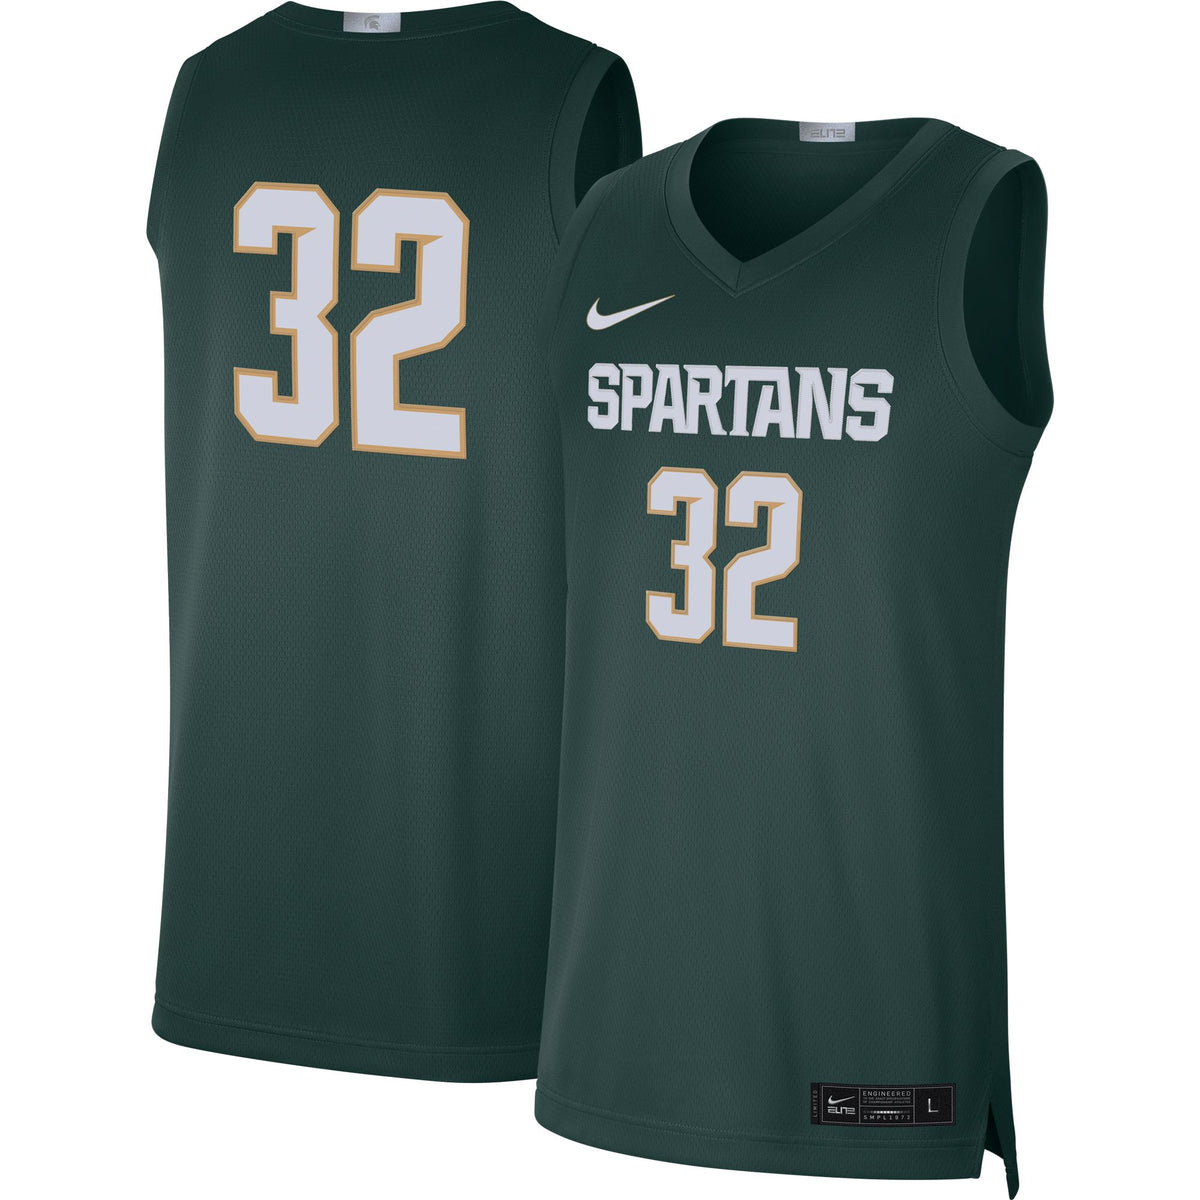 Michigan State Men's Basketball on X: New practice jerseys ✓ @Nike  @nikebasketball  / X